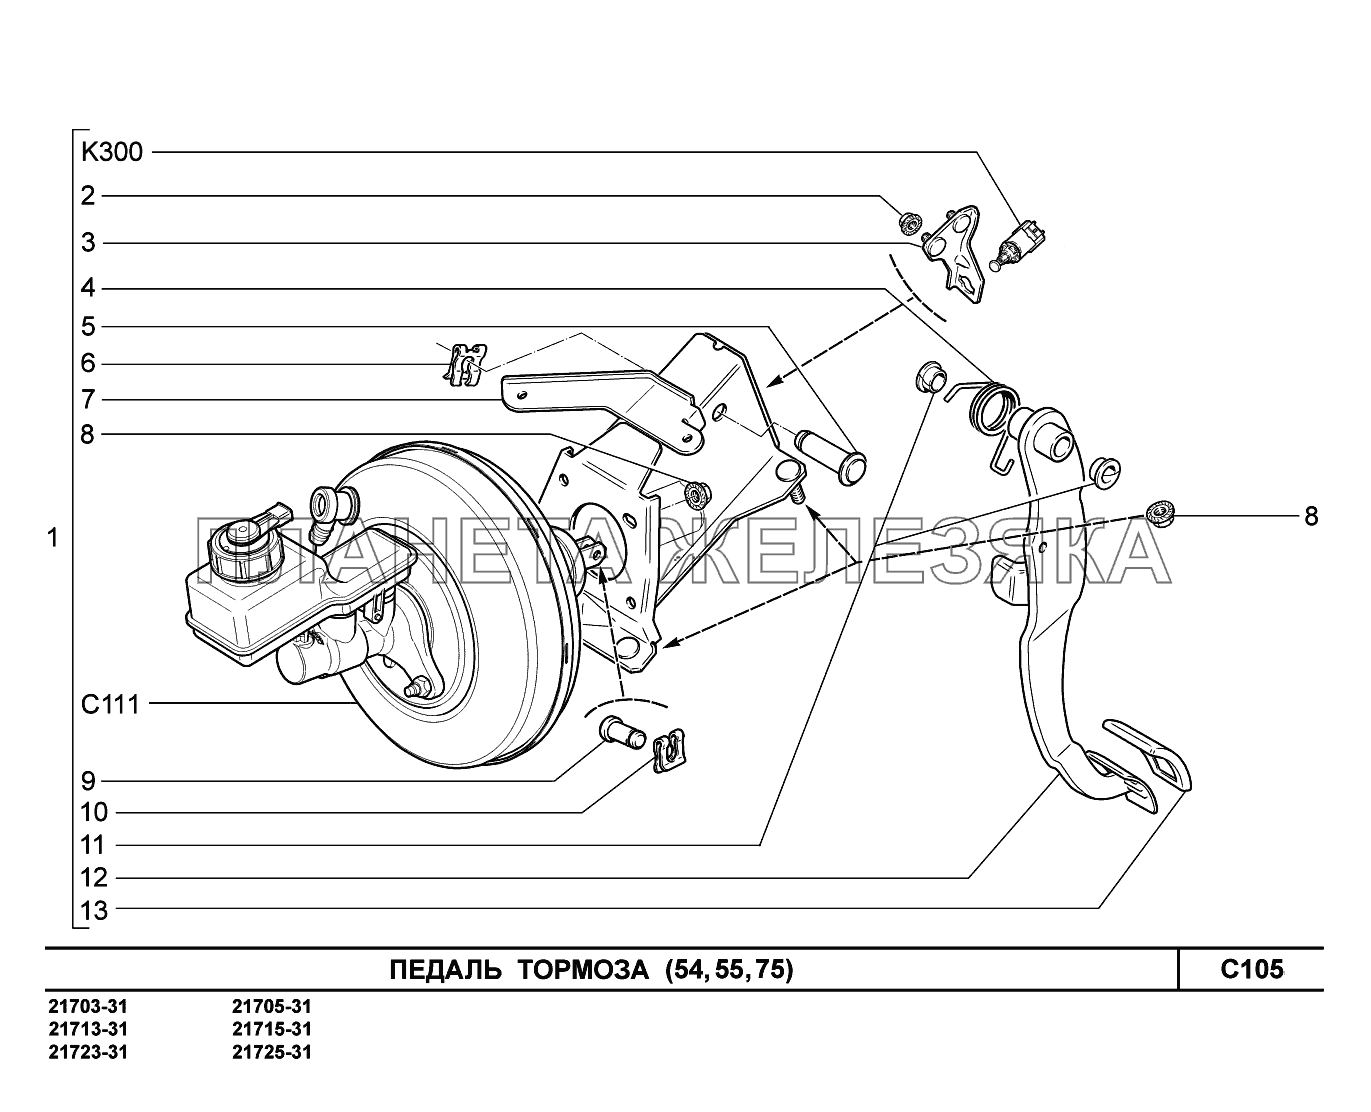 C105. Педаль тормоза ВАЗ-2170 